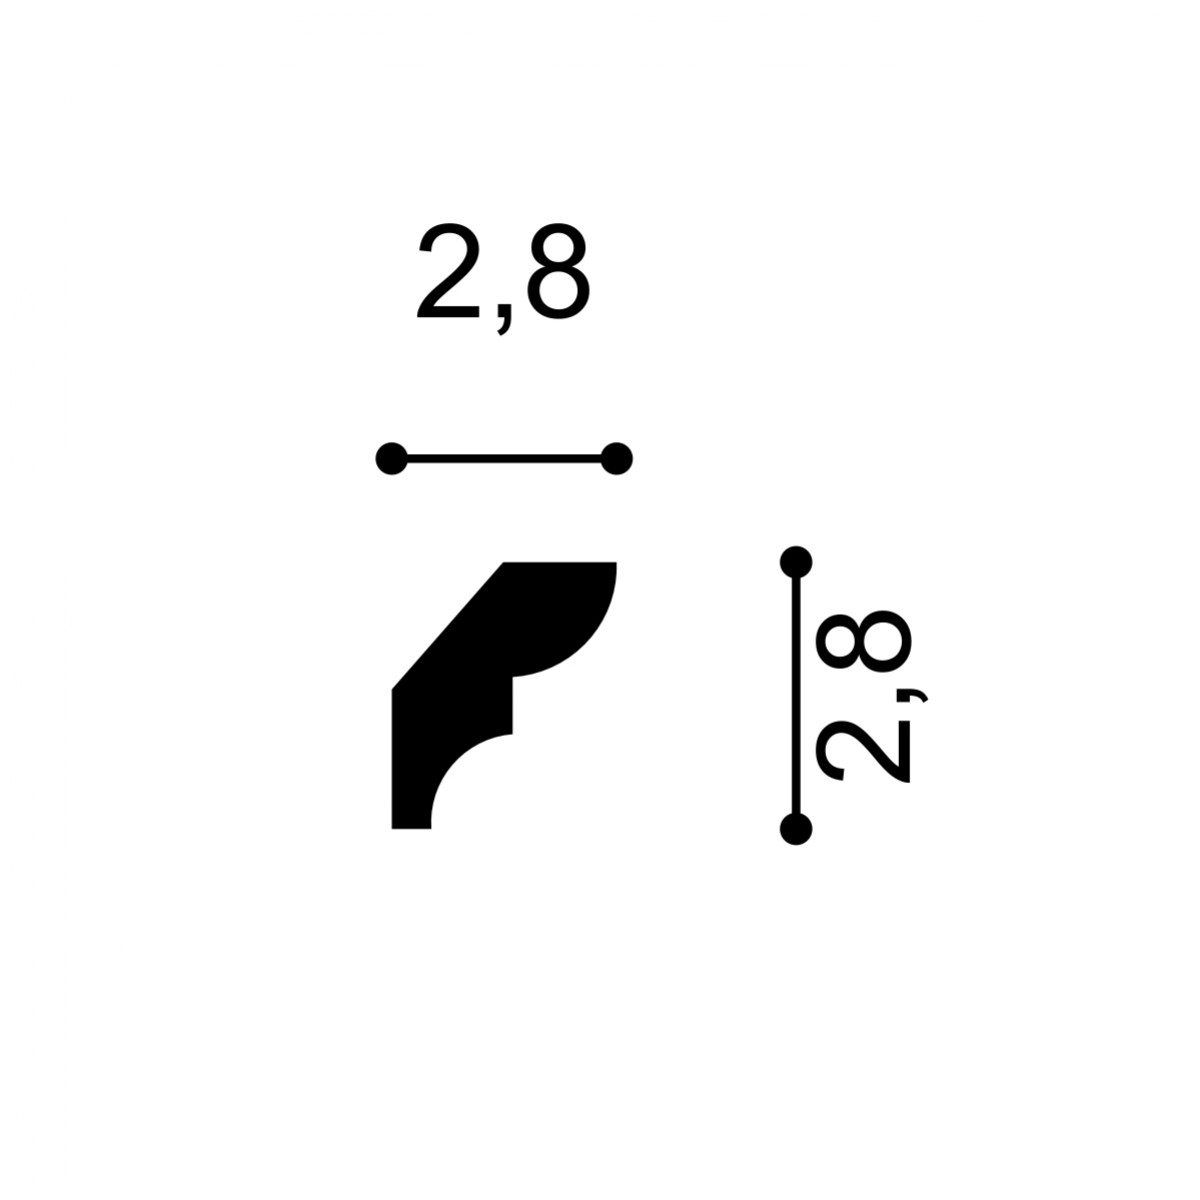 Cornișe tavan Manavi MNV-C3 - 2.8x2.8x200, material: polimer rigid